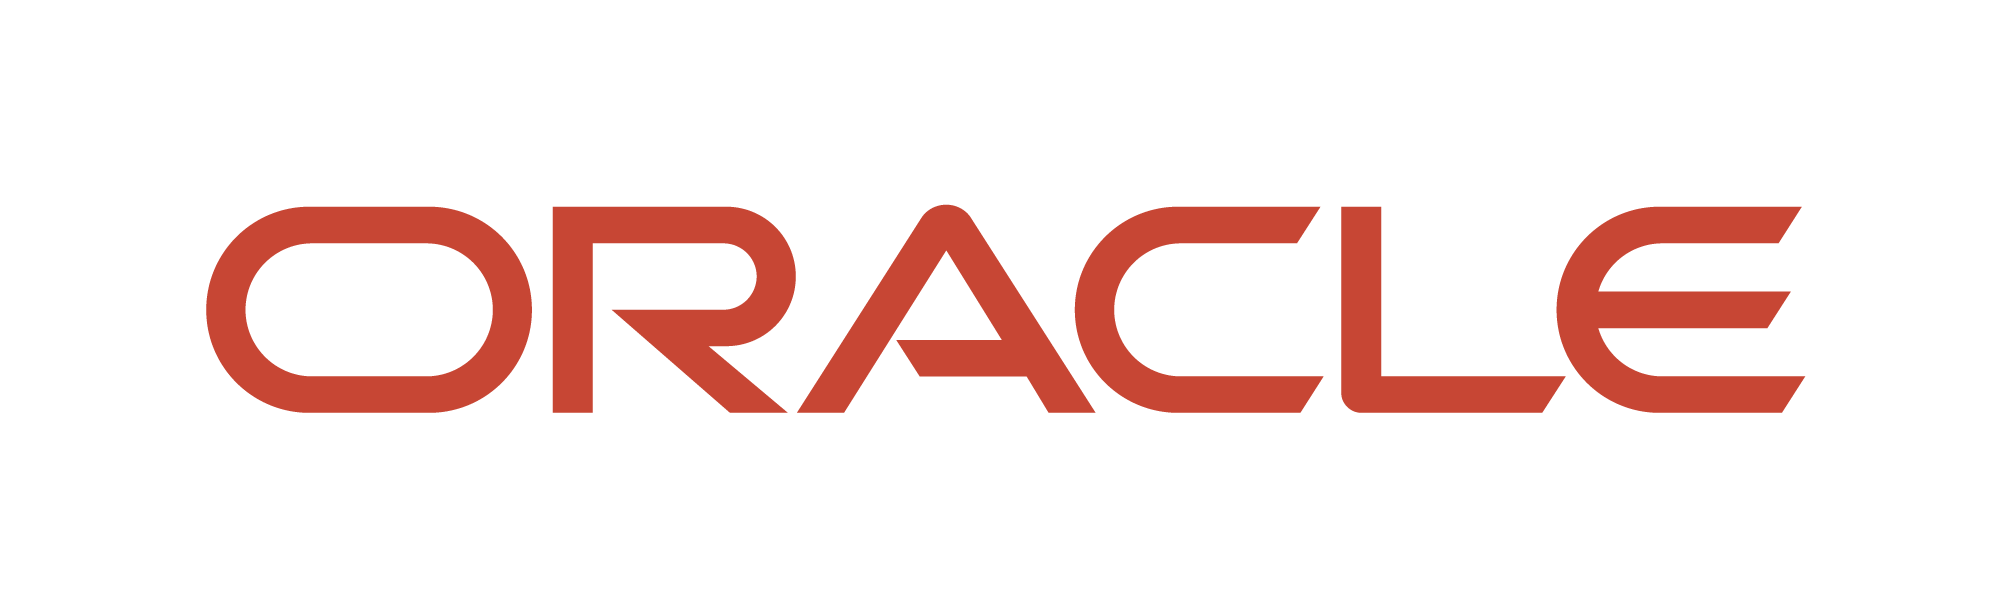 ORACLE_logo